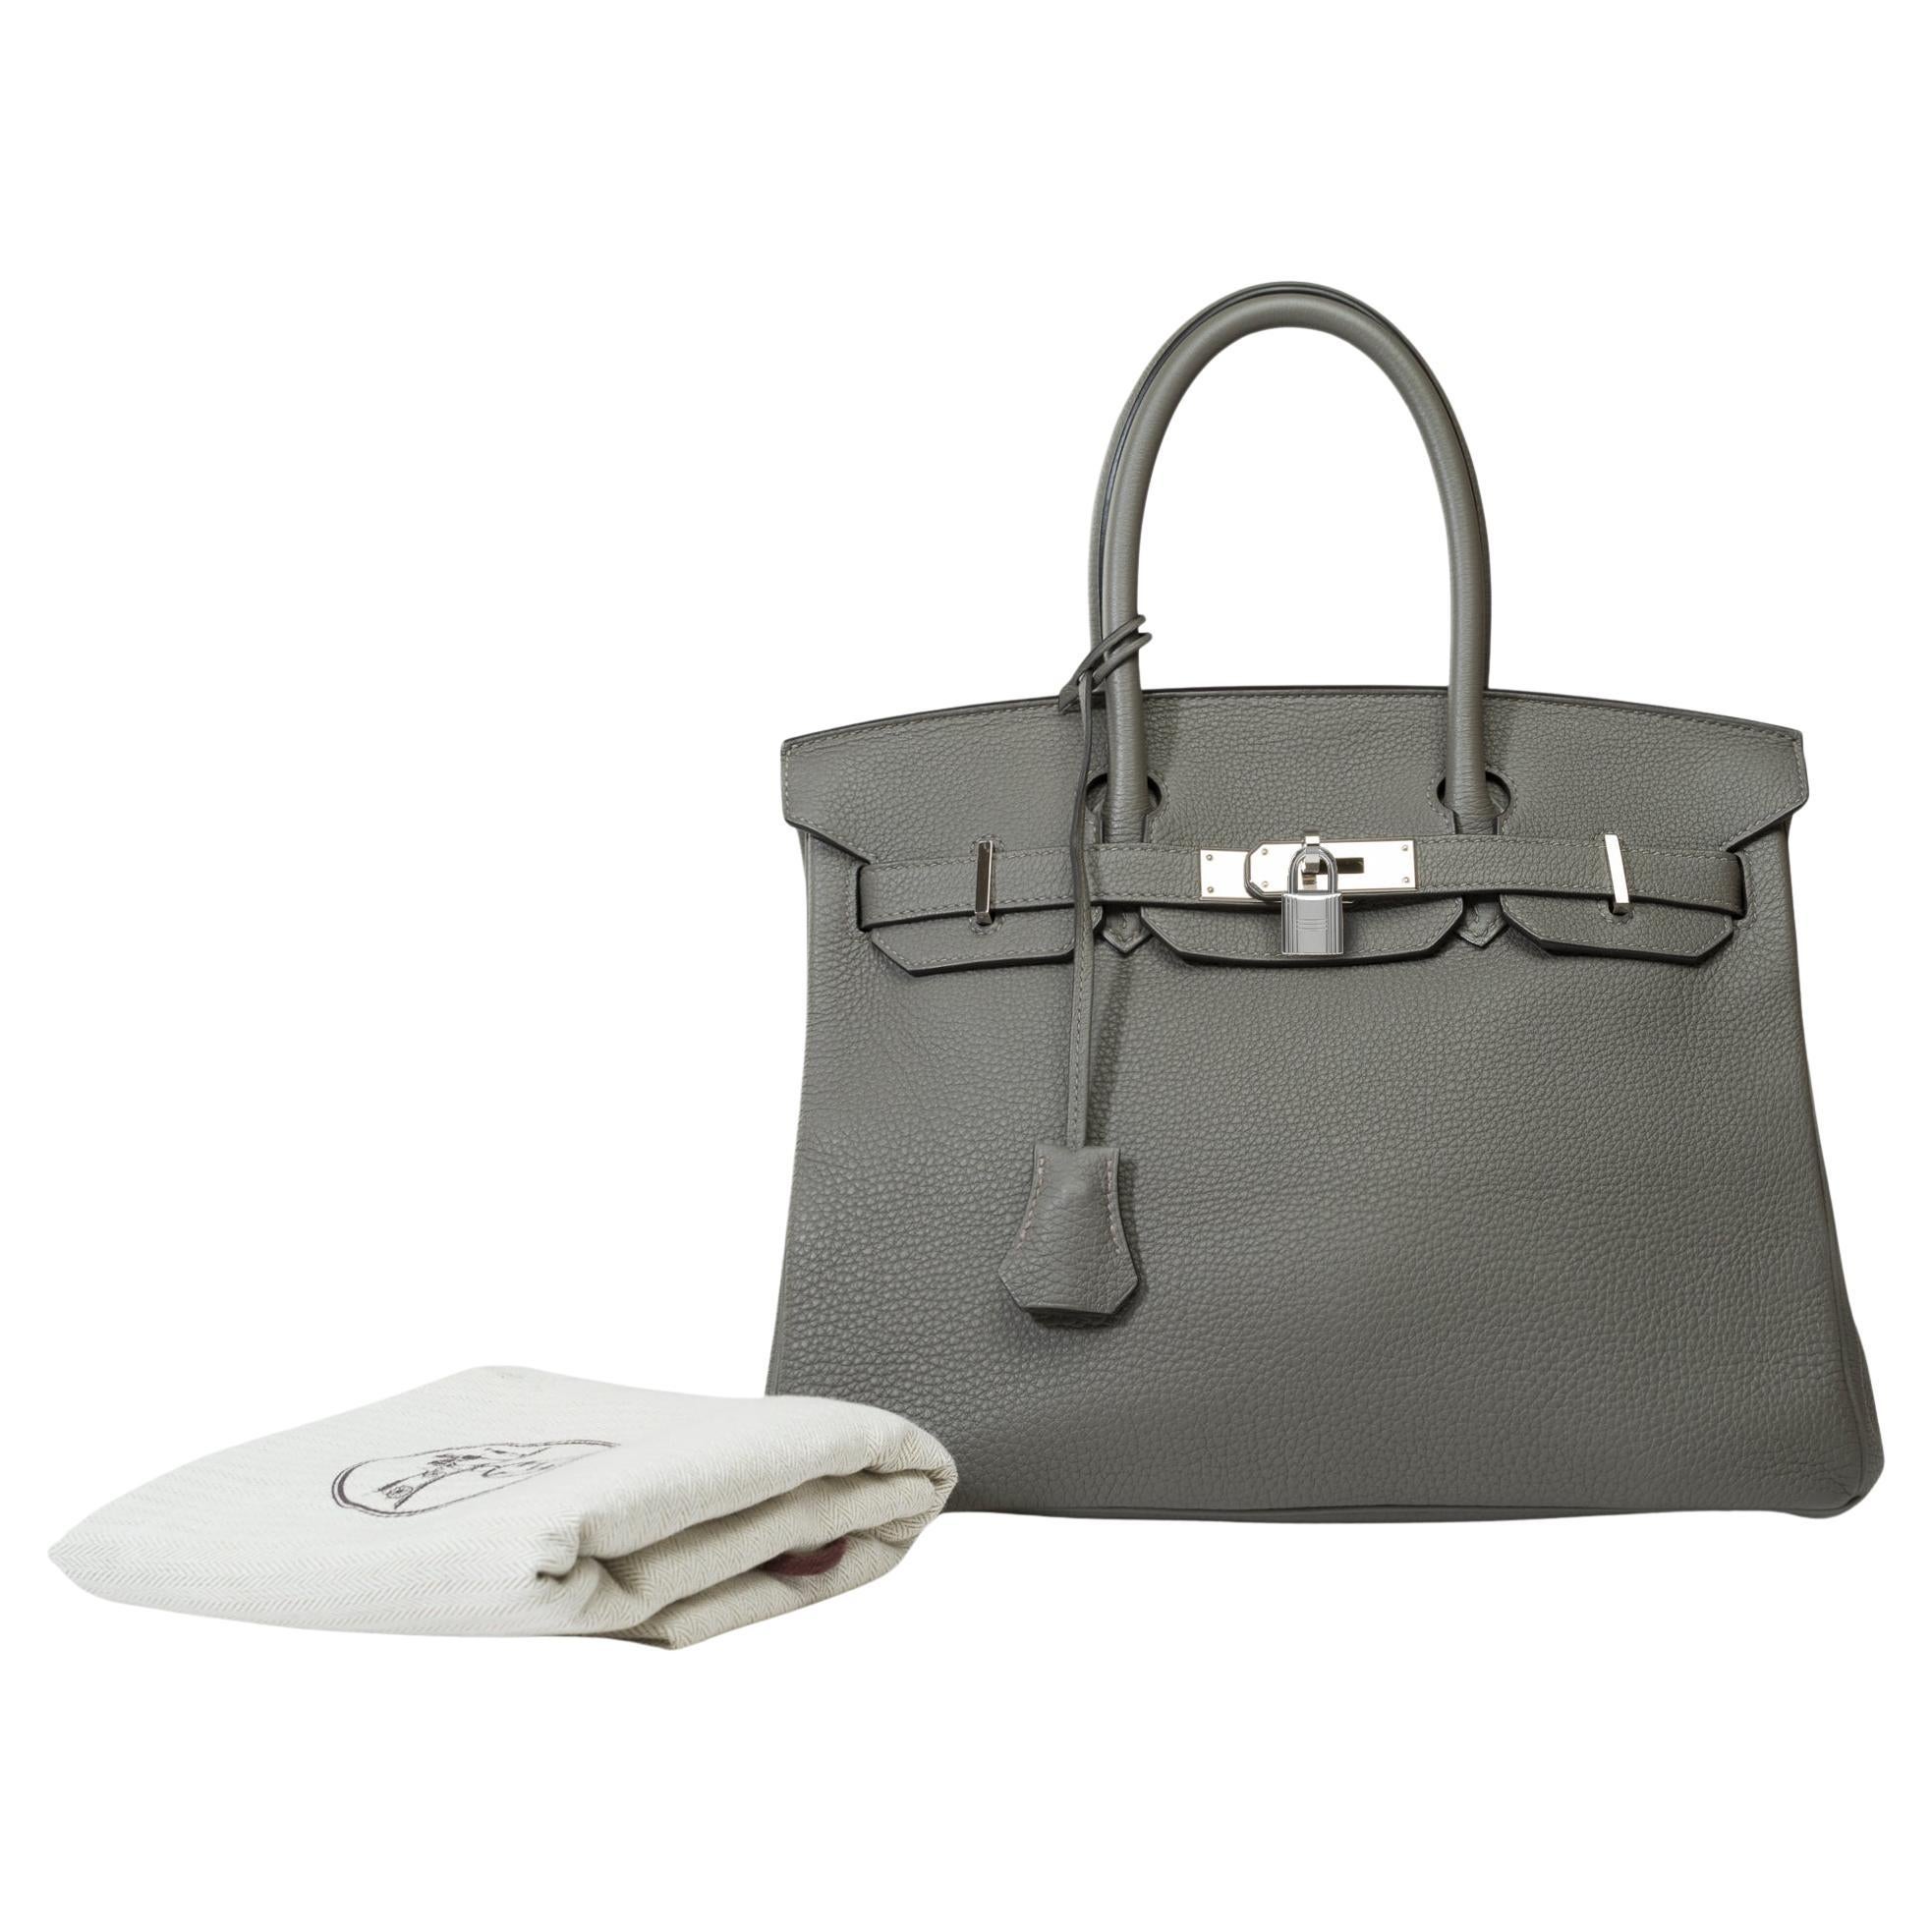 Very Chic Hermes Birkin 30 handbag in Gris Meyer Togo leather, SHW For Sale